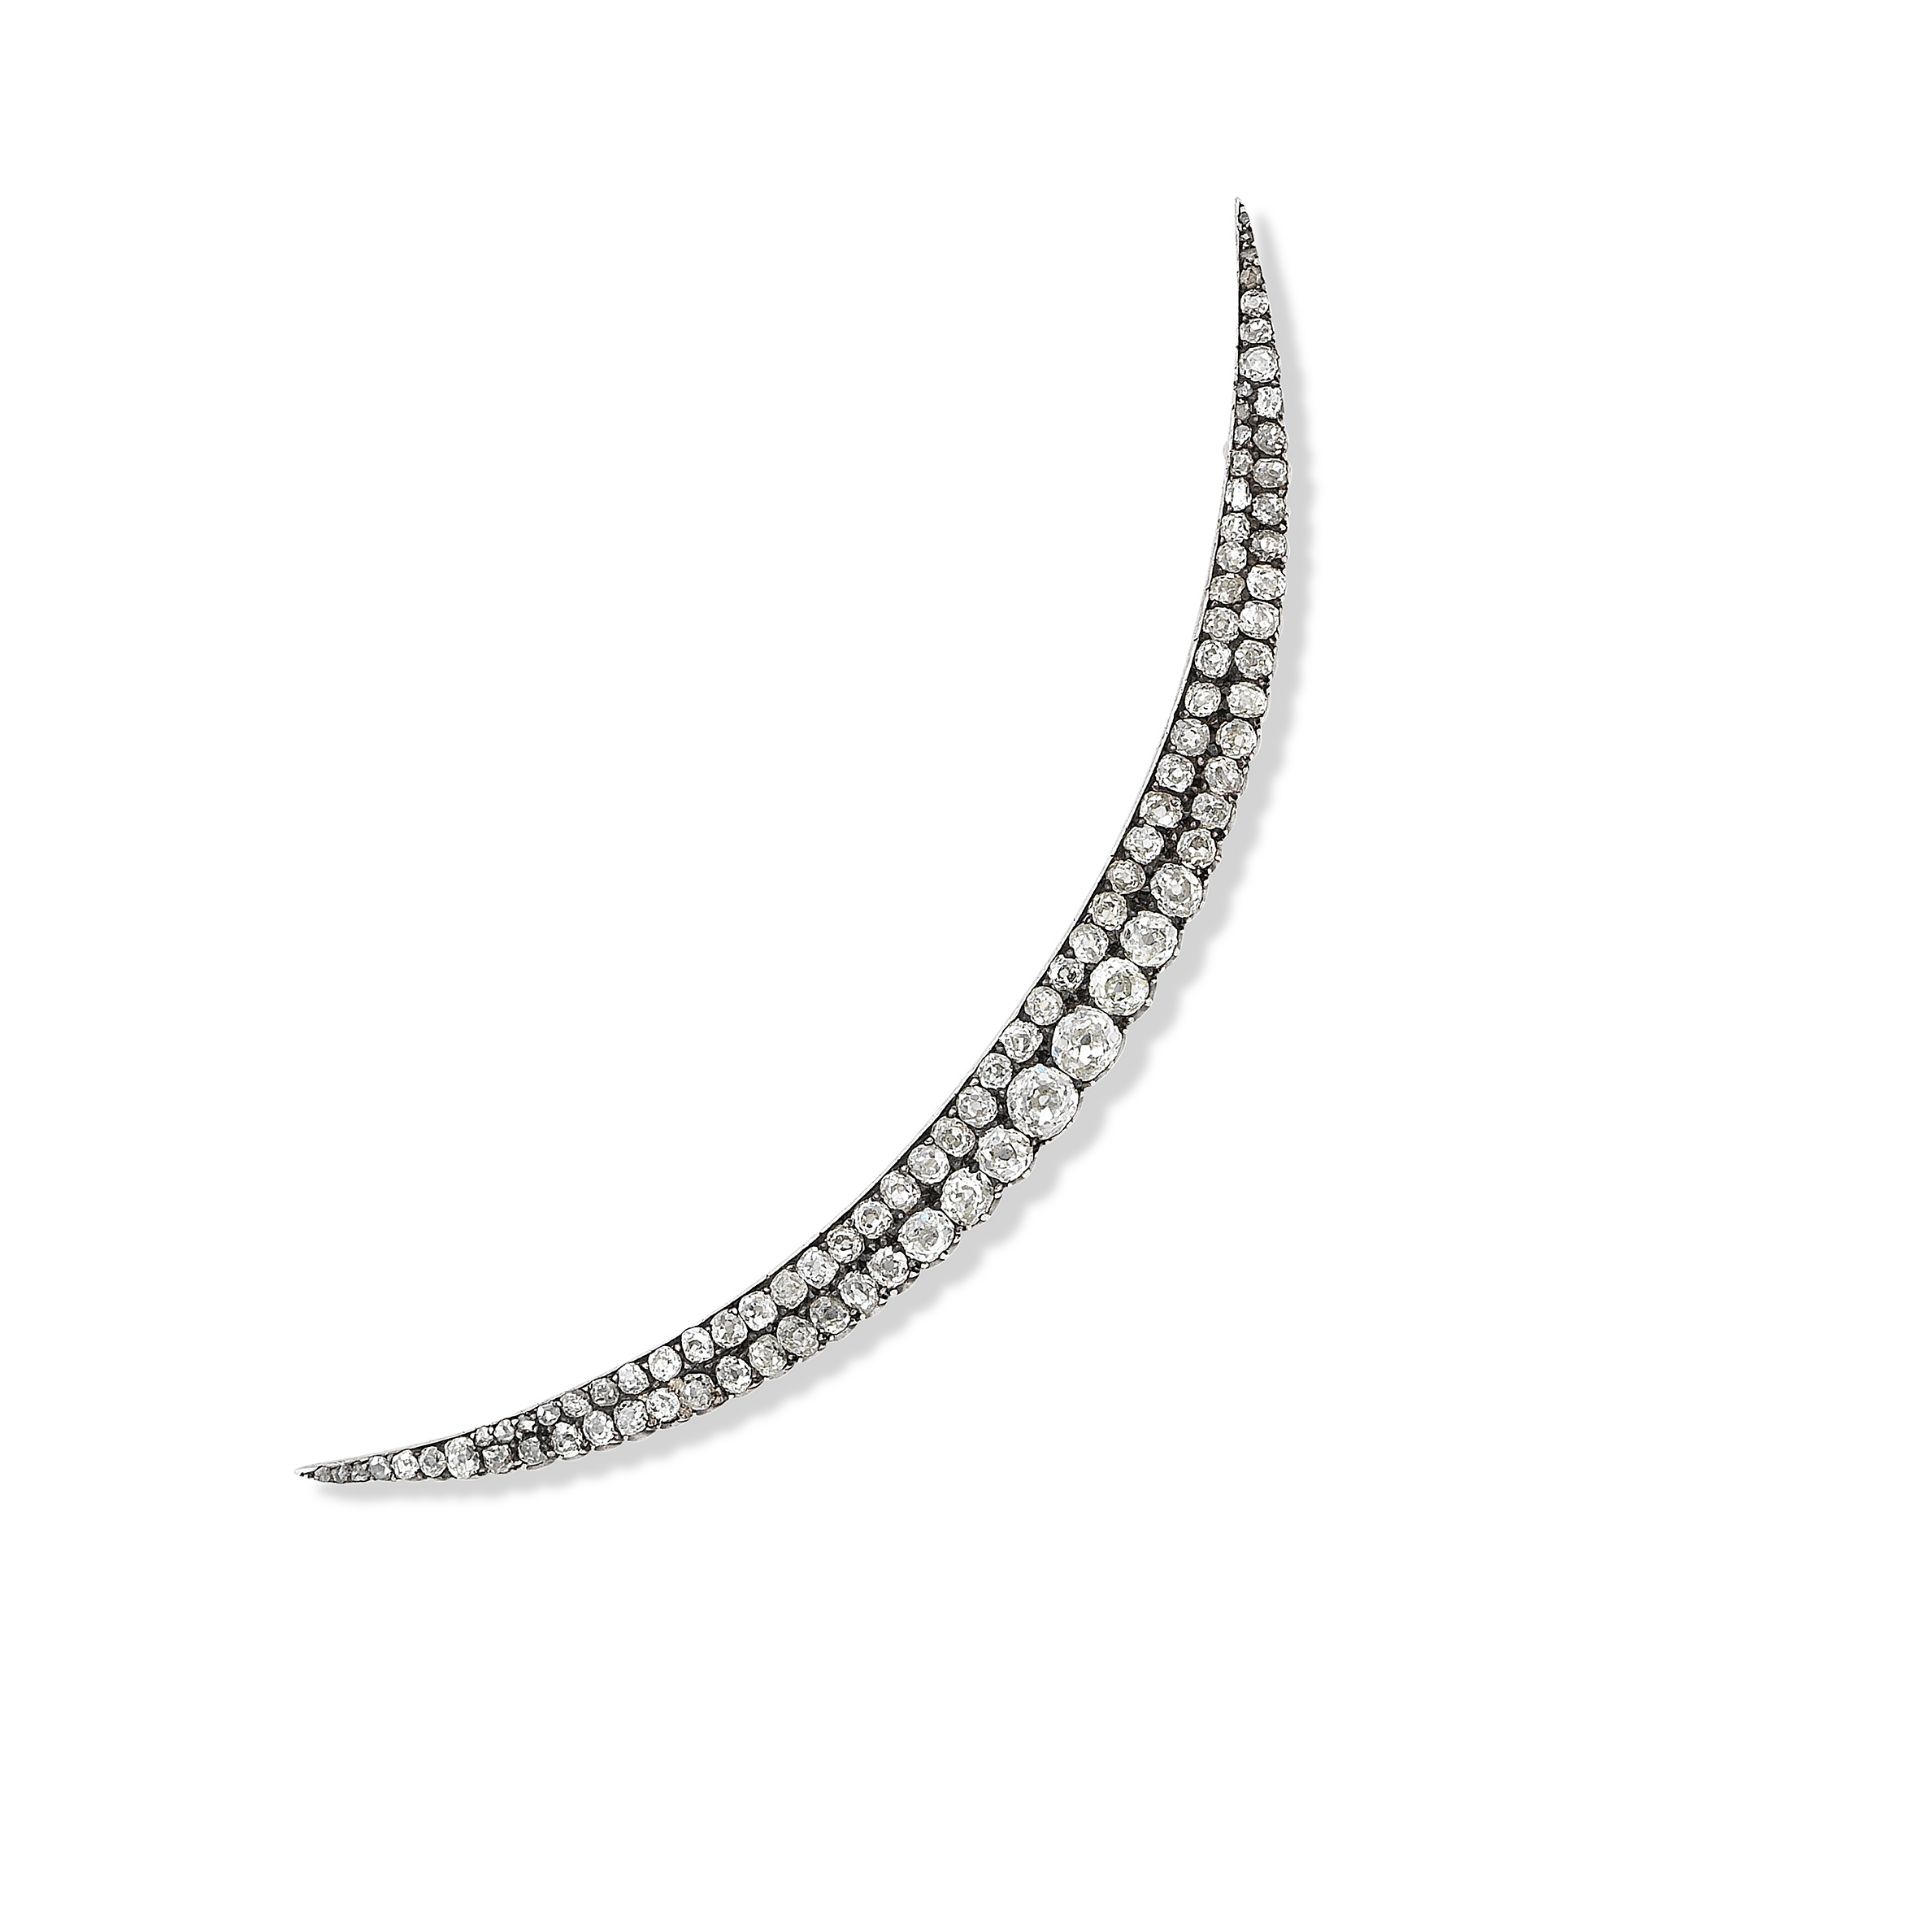 A diamond crescent brooch